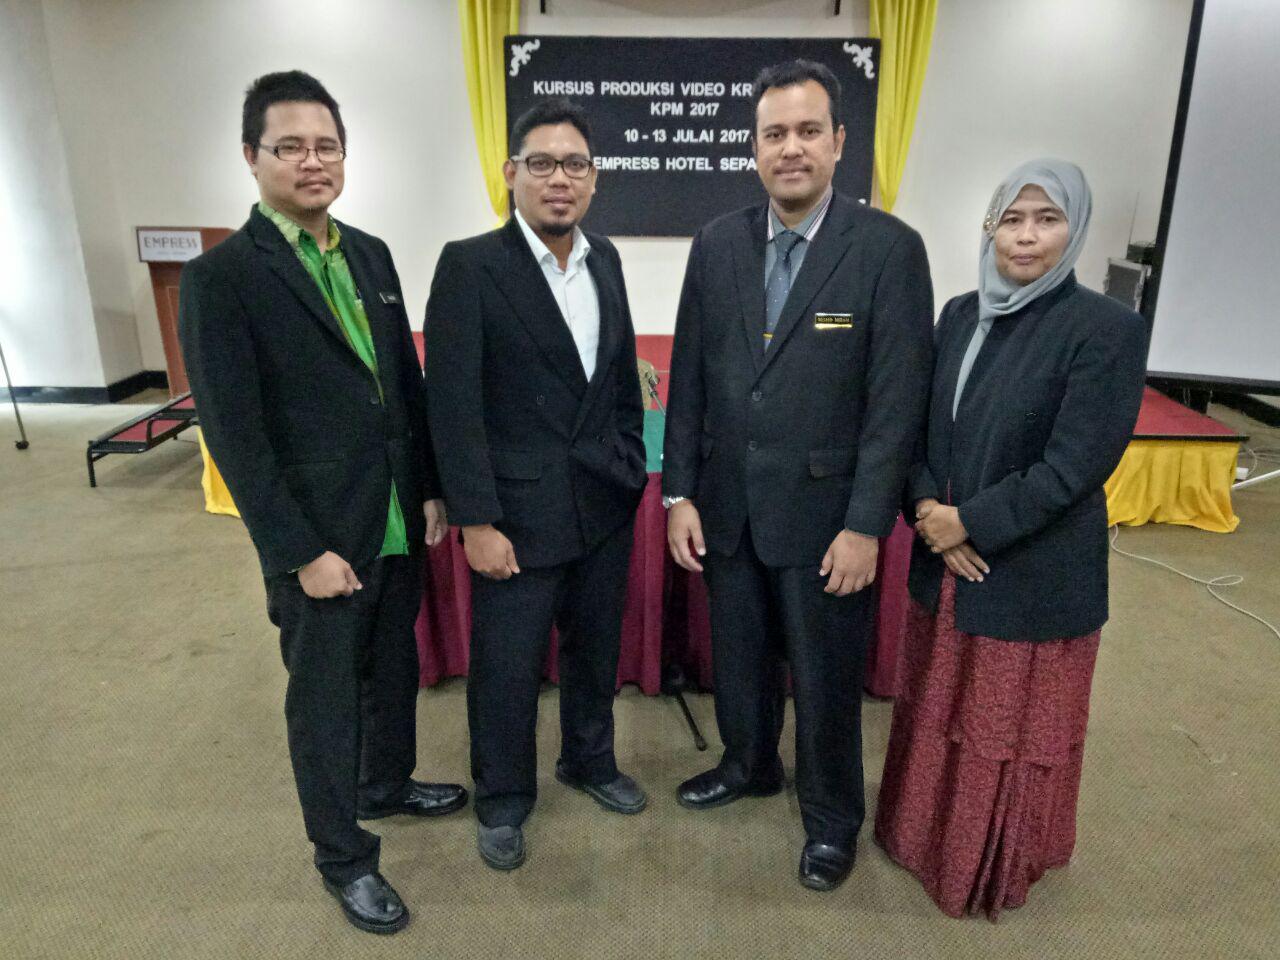 Soalan Spm 2019 Sains Rumah Tangga - Terengganu z